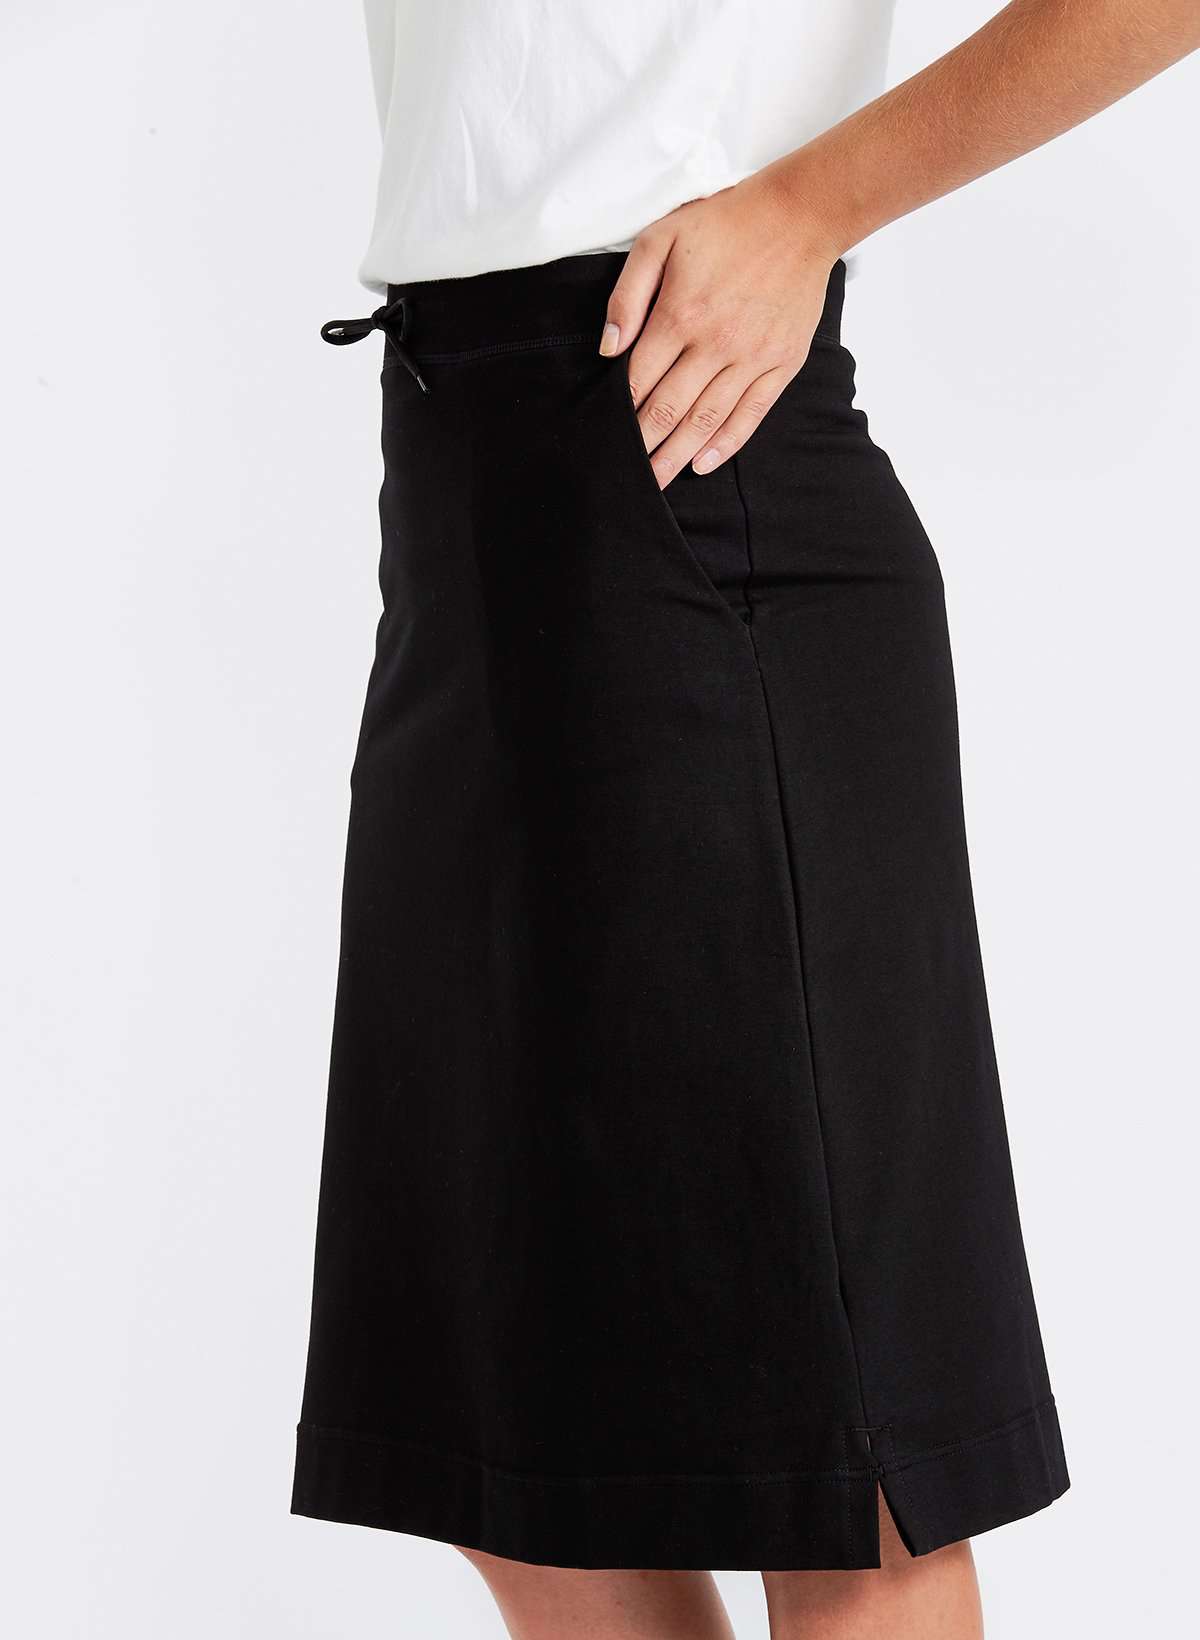 Jordan Midi Skirt - FINAL SALE Skirts